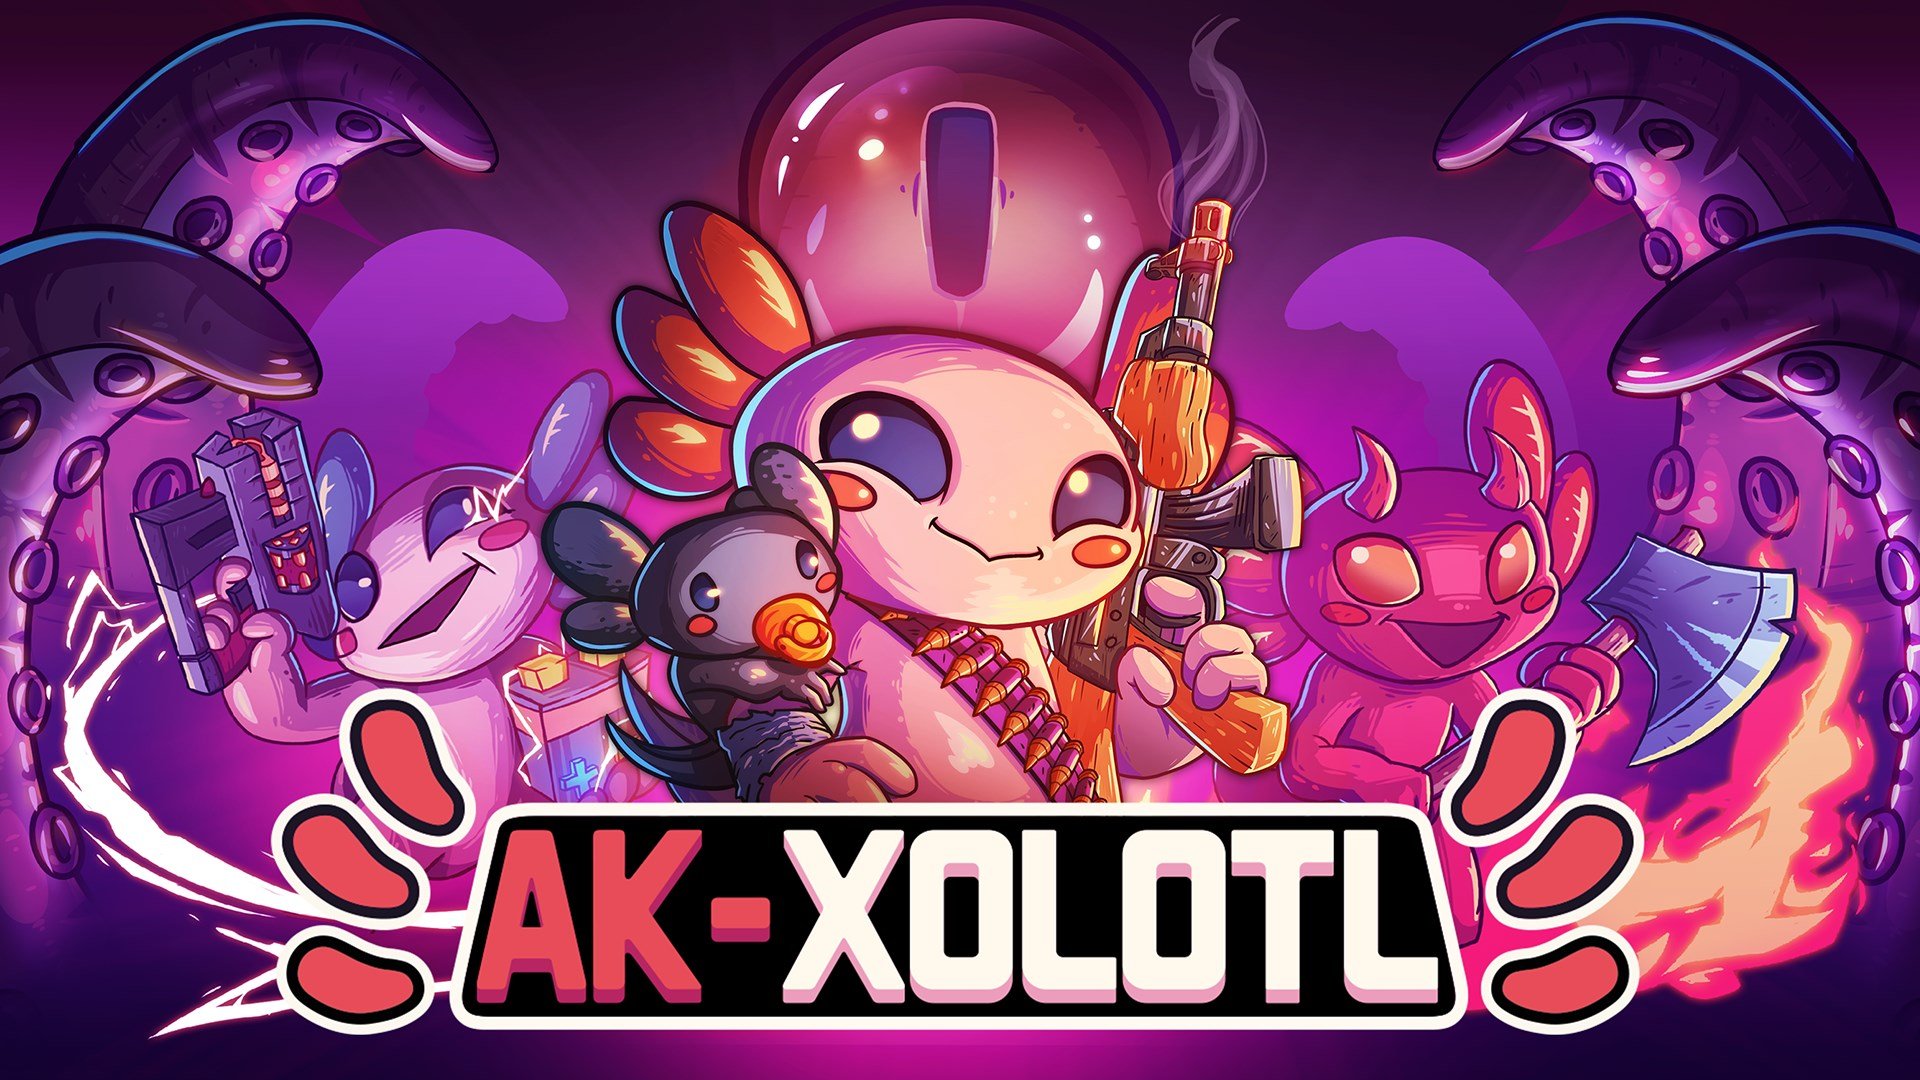 AK-xolotl cover image